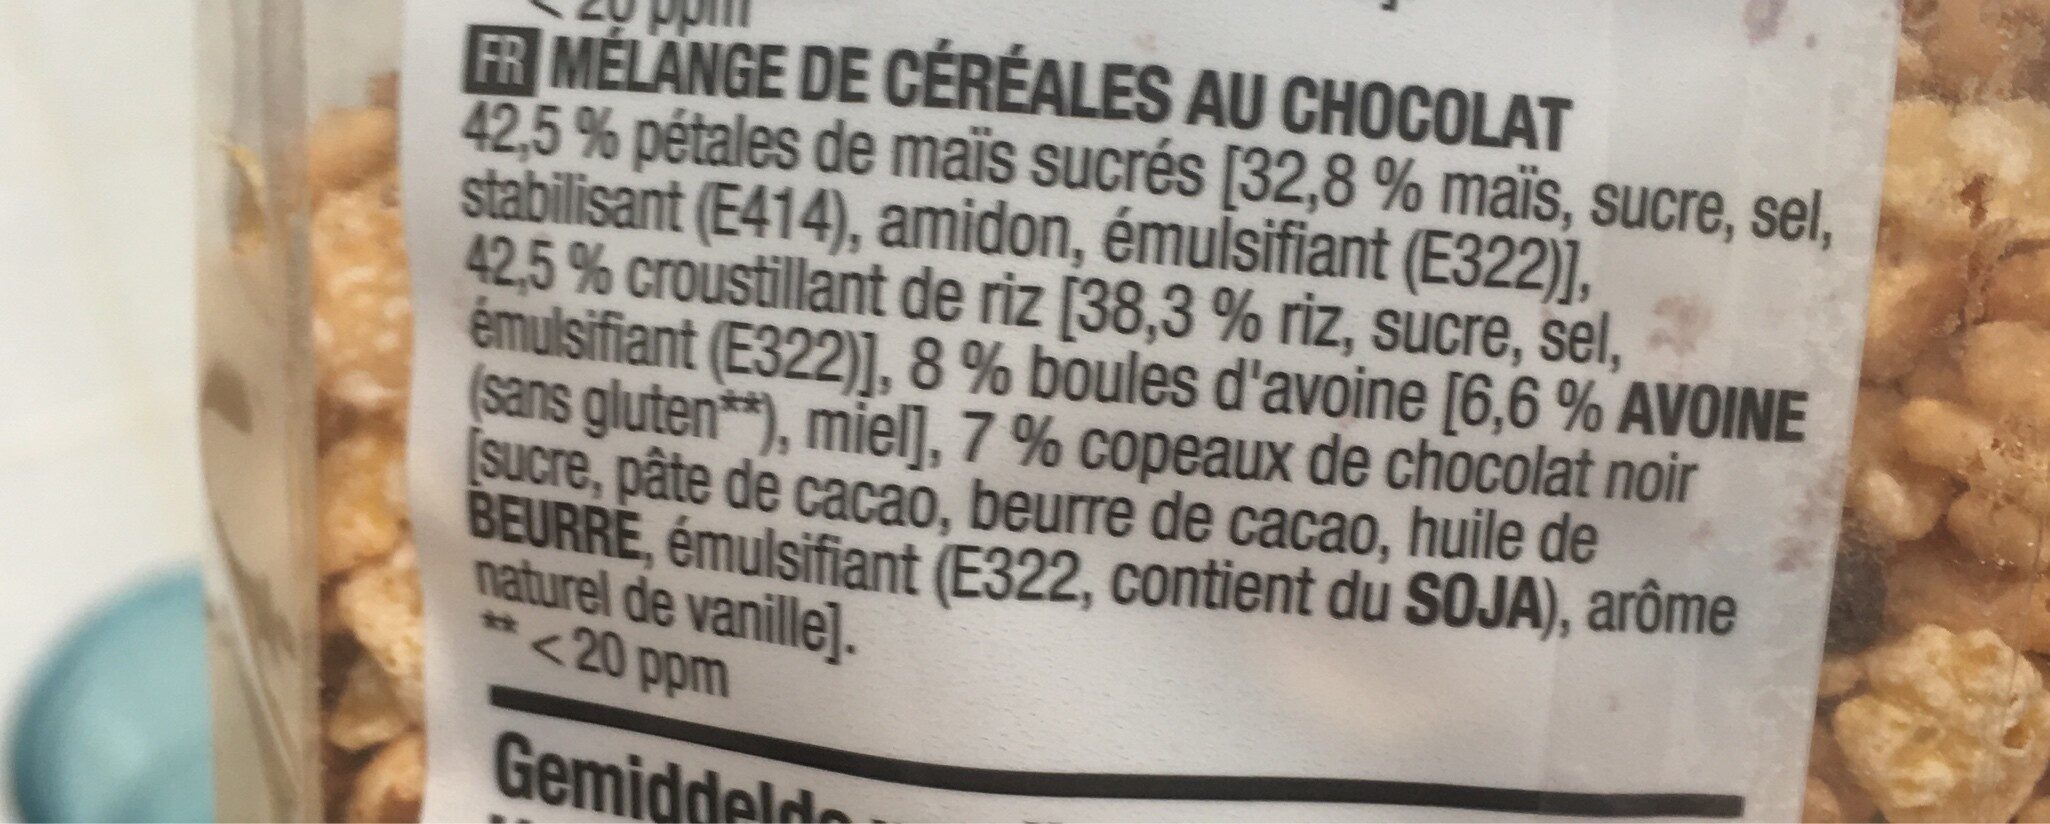 Céréales au chocolat - Ingrediënten - fr